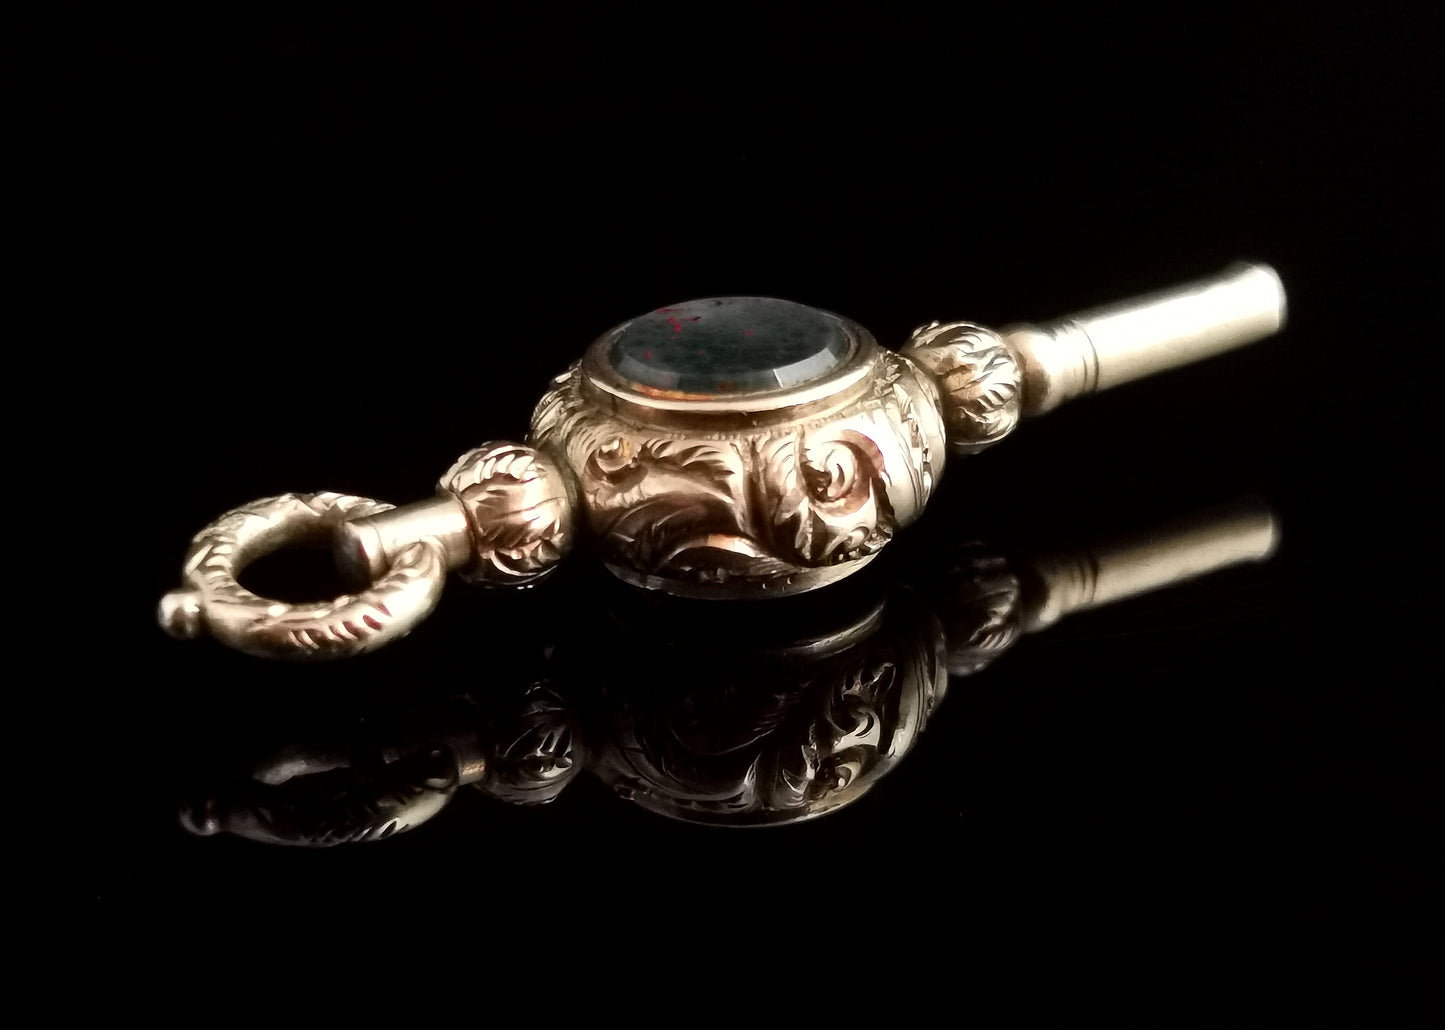 Antique Georgian 9ct gold watch key pendant, Amethyst and Bloodstone, pendant